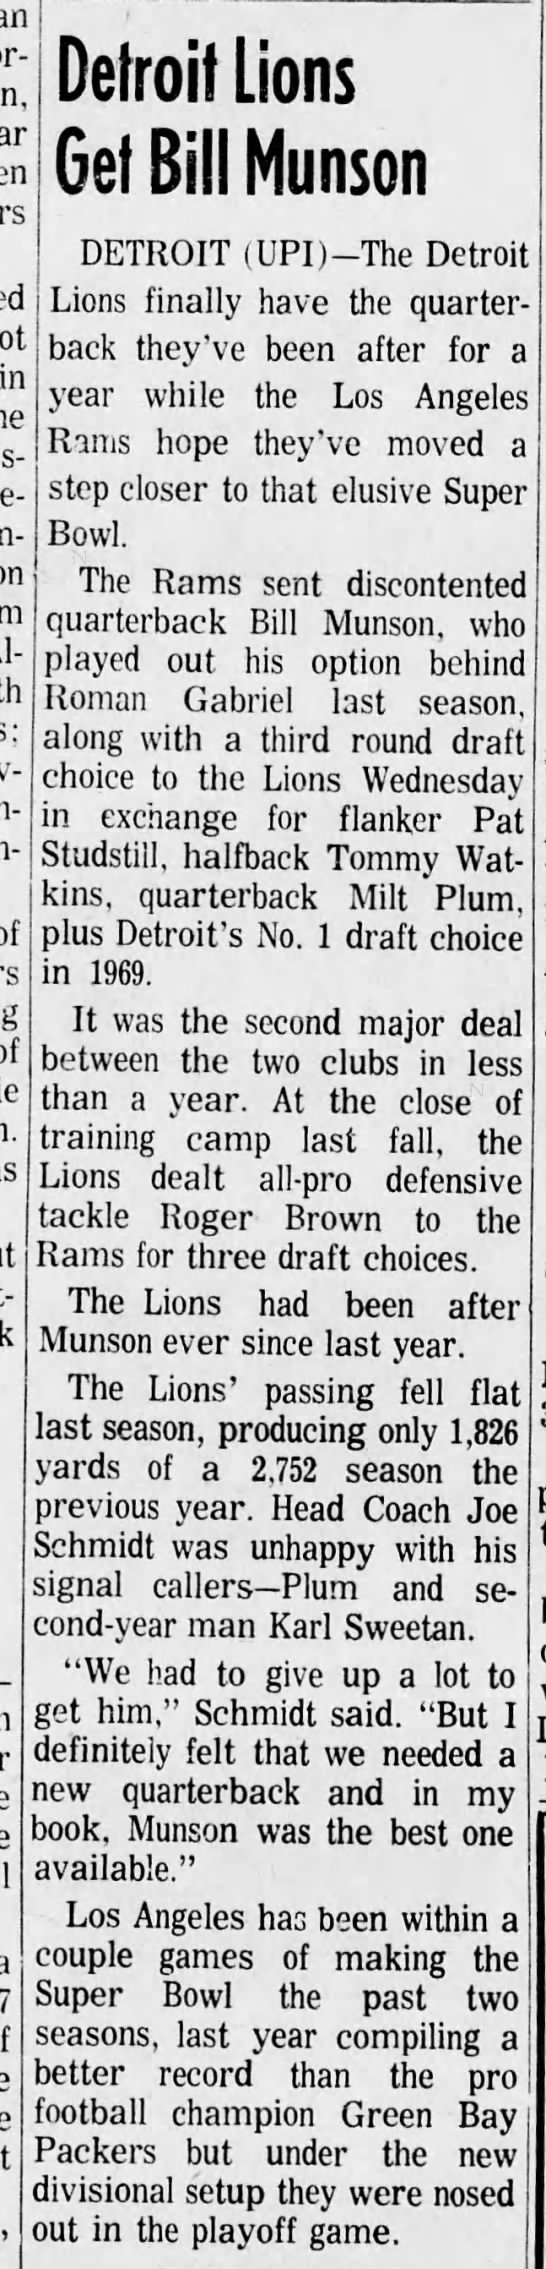 Detroit Lions Get Bill Munson - 